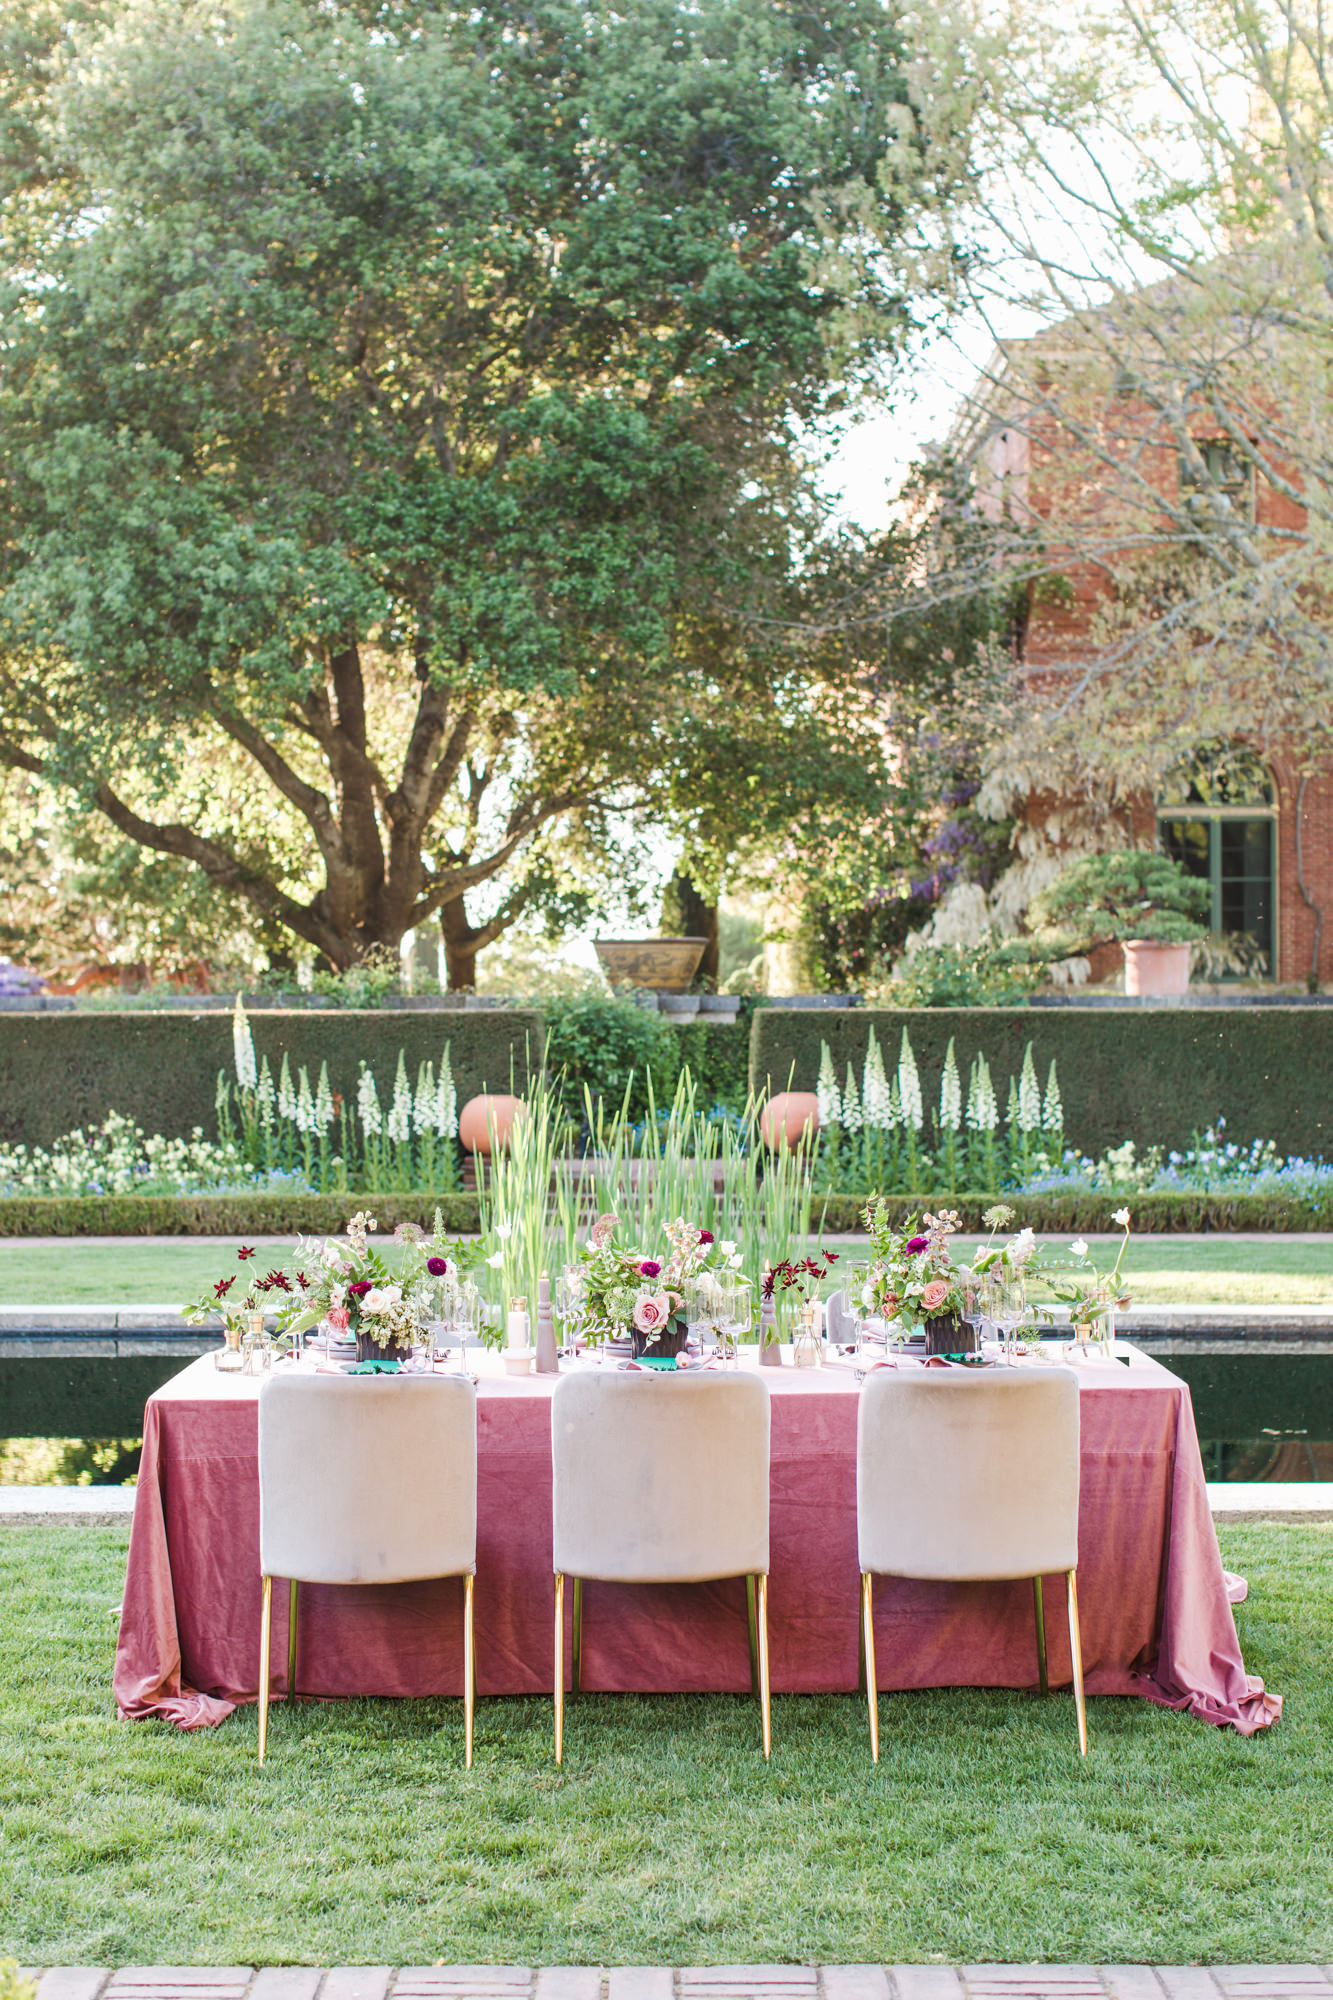 Filoli Garden Wedding Reception with mauve velvet linen and pinks